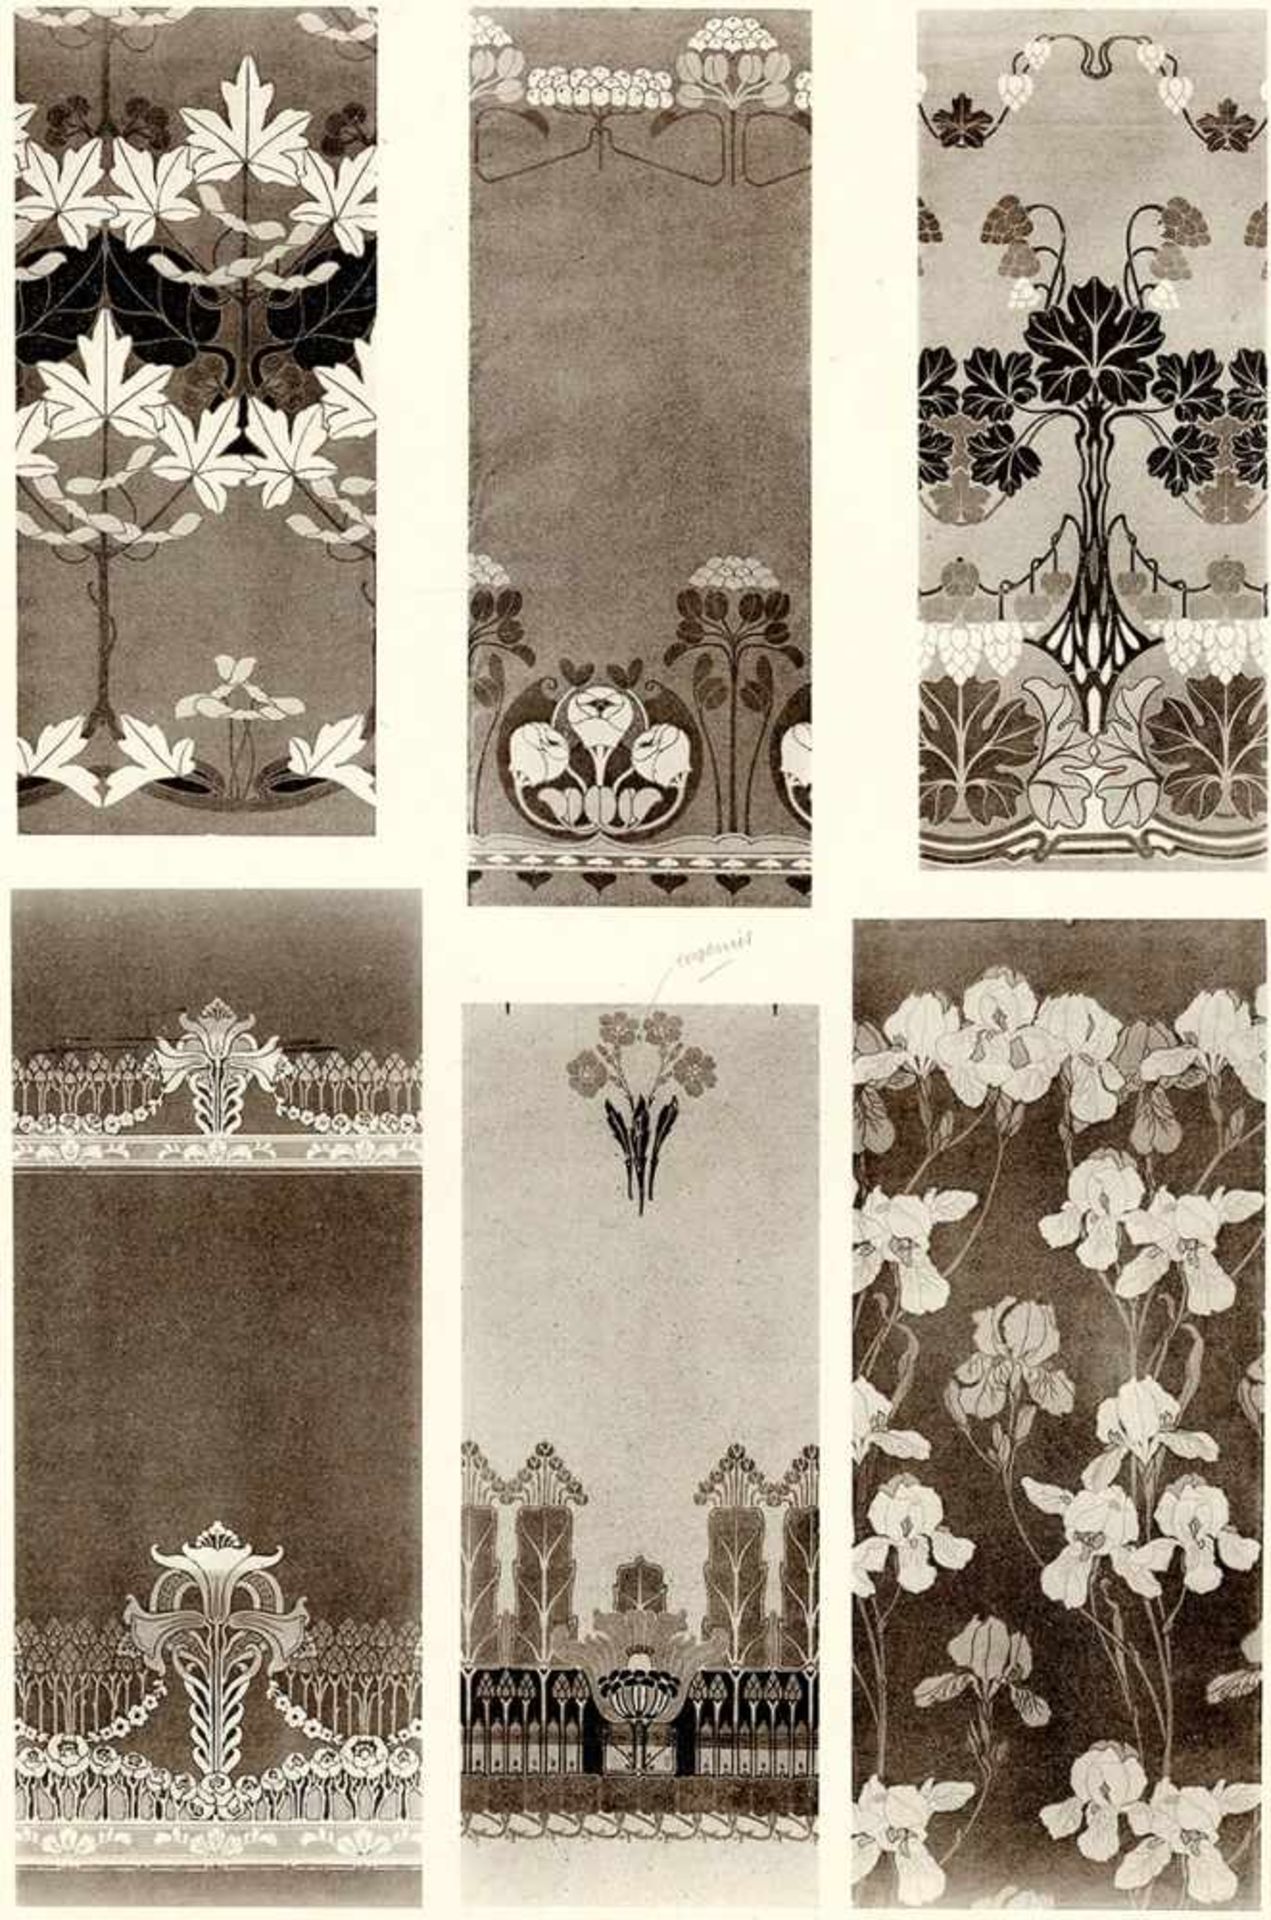 Jugendstil. – Motifs de décoration plane. "Paris, Guérinet, um 1905. Fol. Tit. u. 24 Tafeln mit